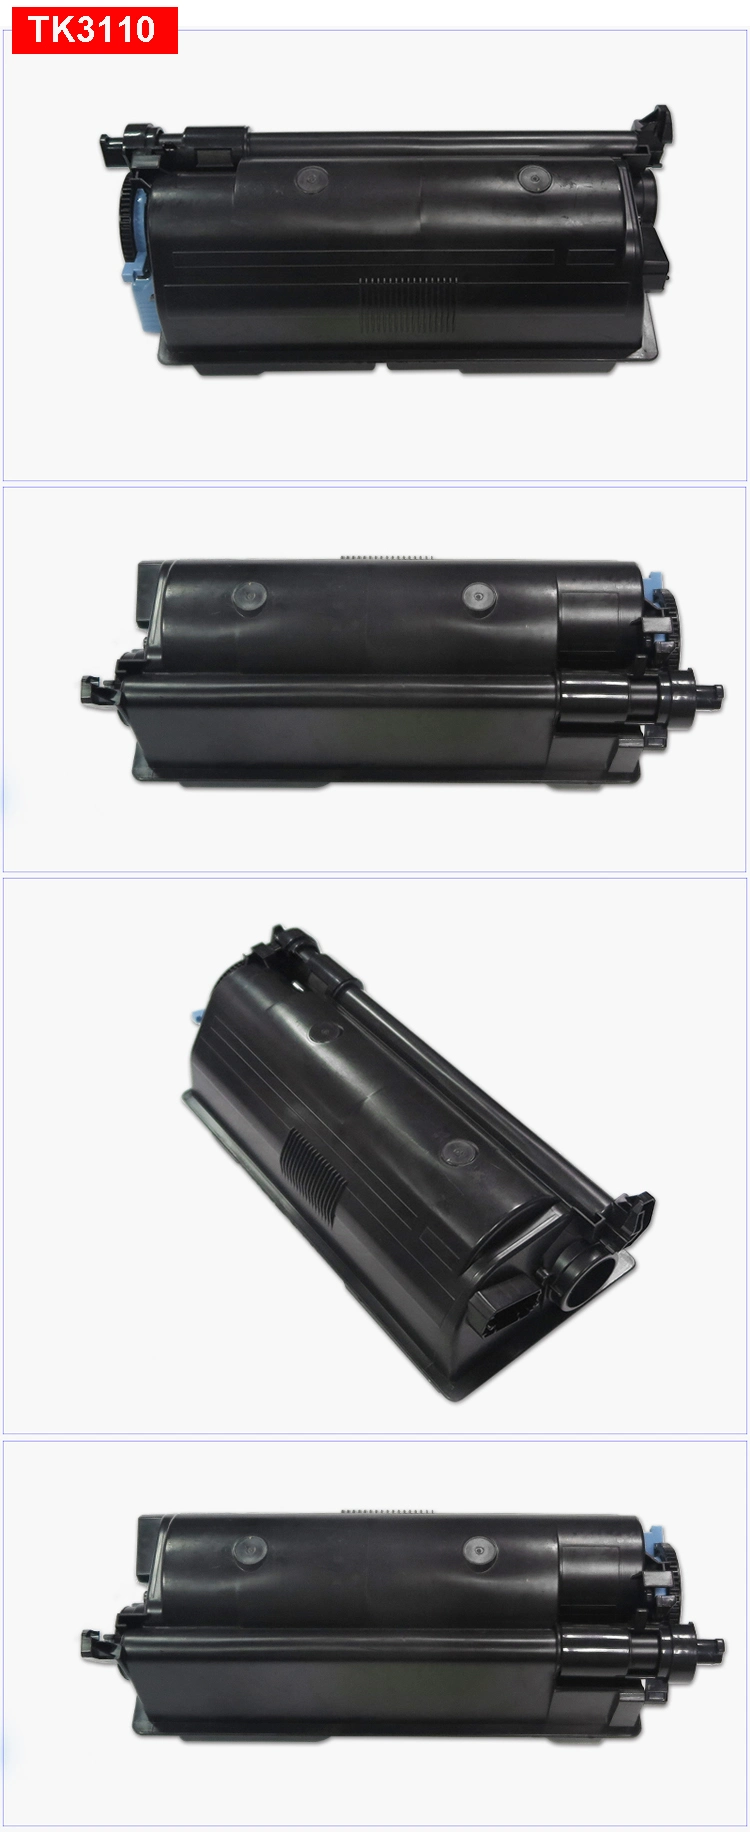 Factory Wholesale Toner Cartridge Compatible for Kyocera Fs 4100DN Printer, Tk3110 Black Copier Toner Cartridge